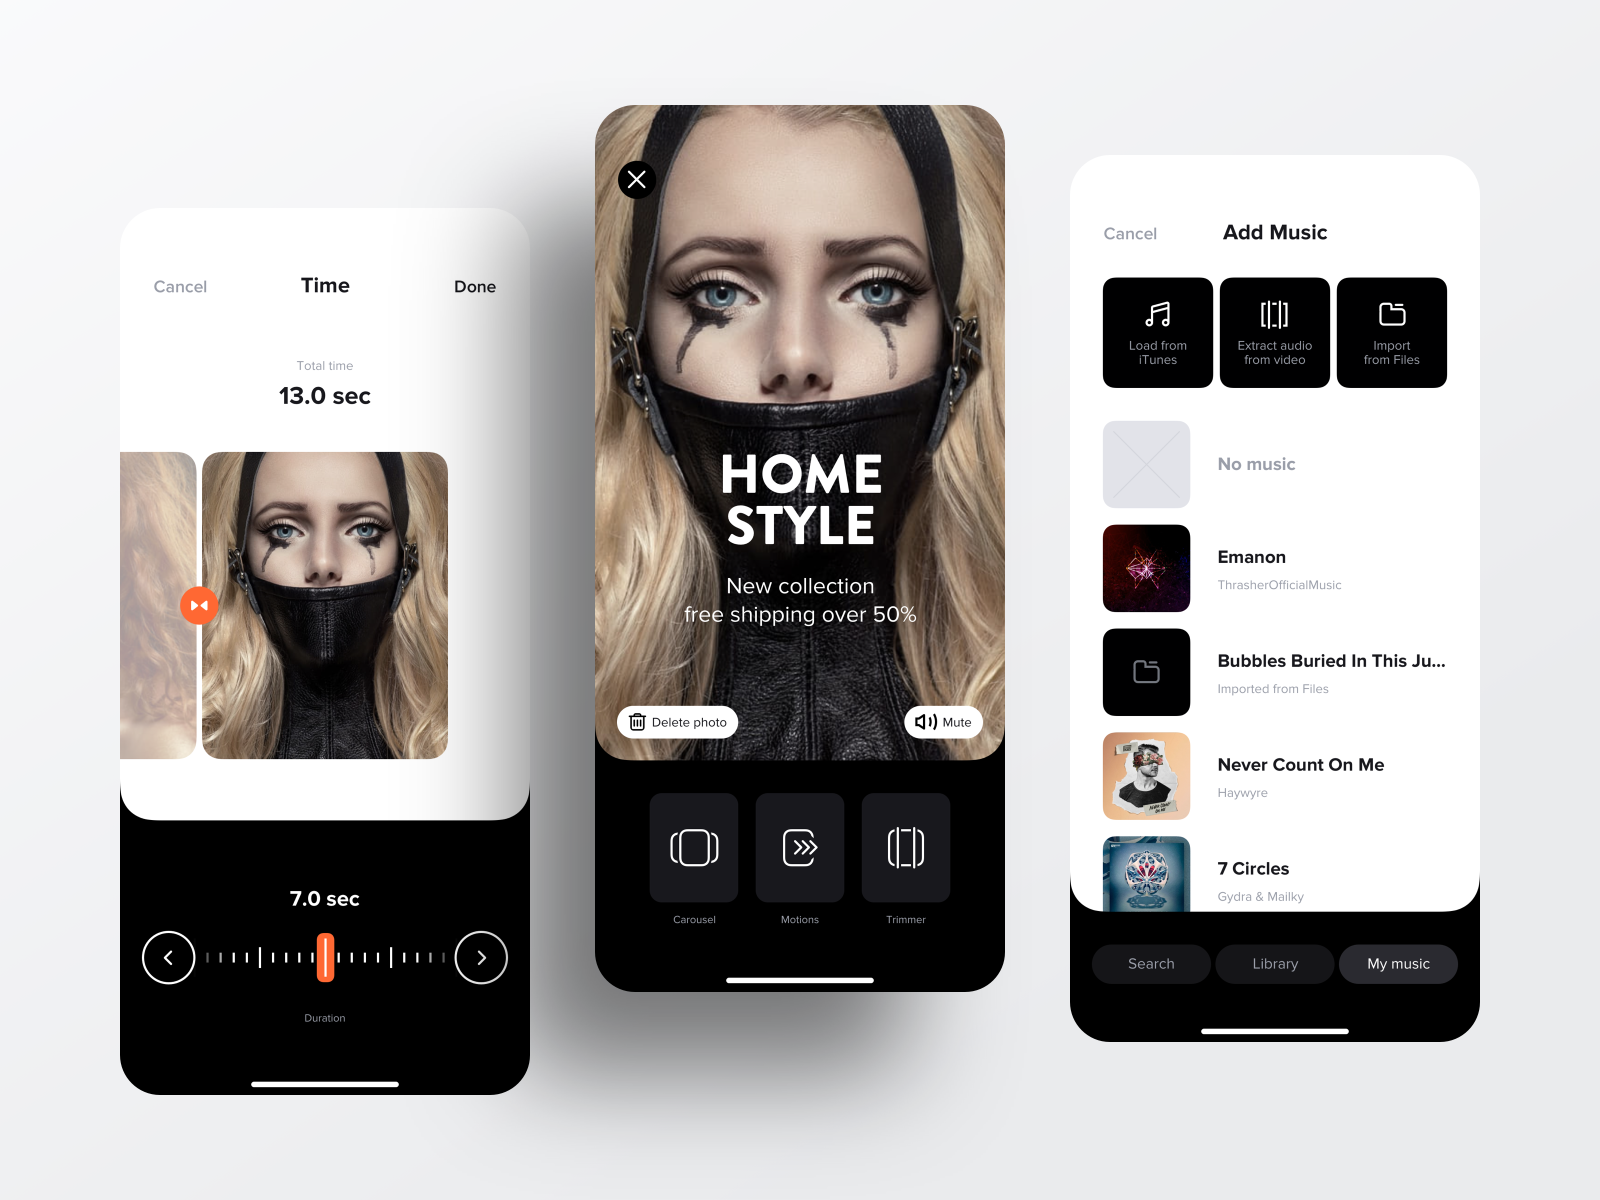 Stories for Instagram | Ios App Design